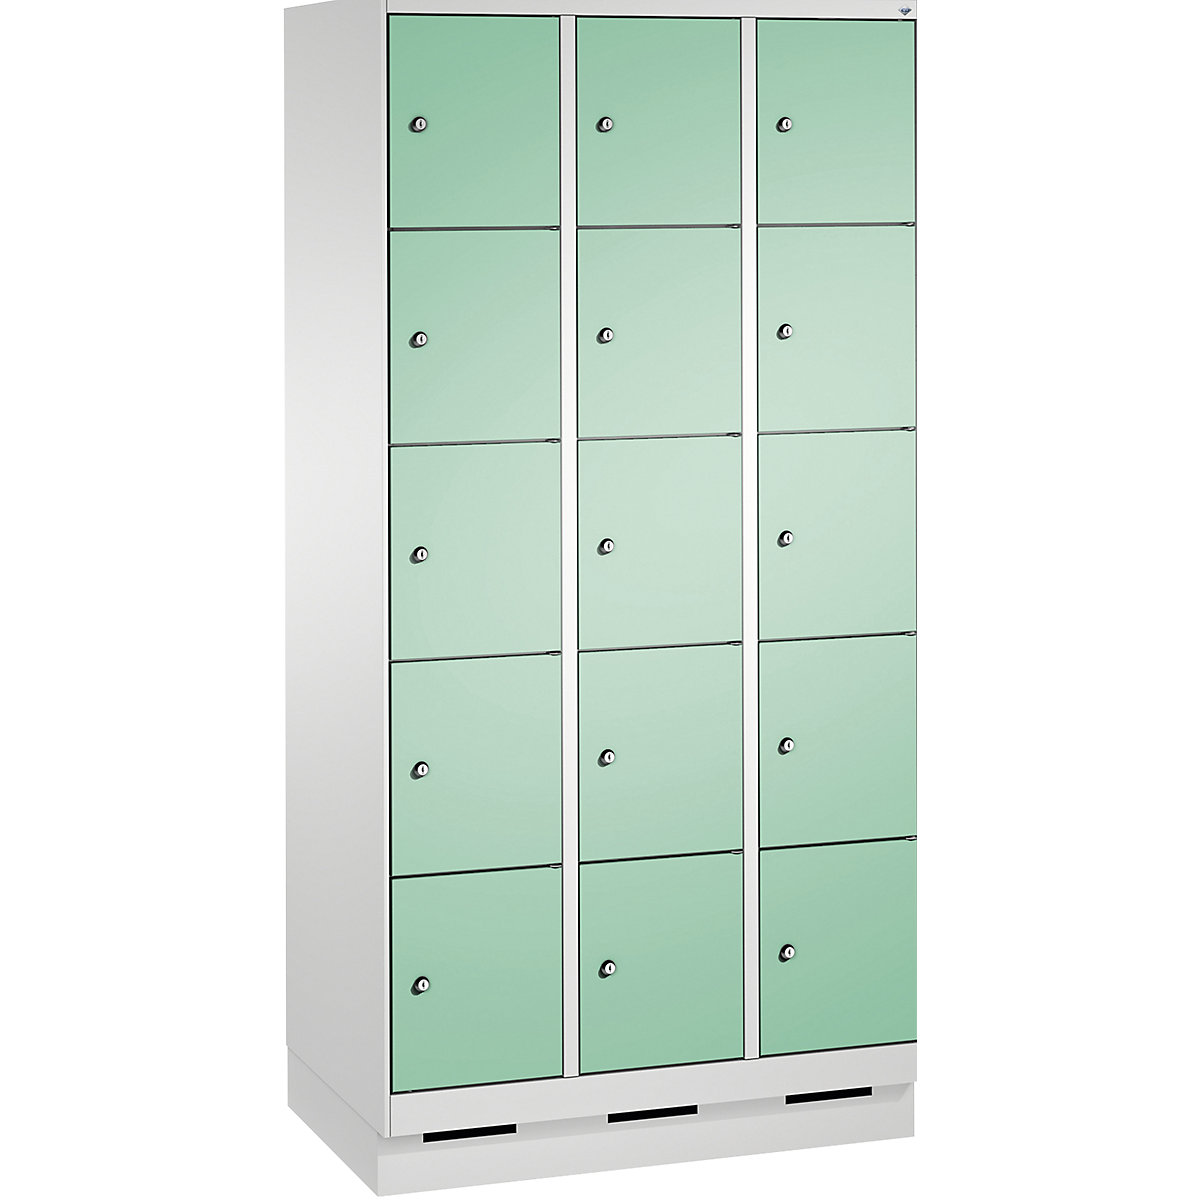 EVOLO locker unit, with plinth – C+P, 3 compartments, 5 shelf compartments each, compartment width 300 mm, light grey / light green